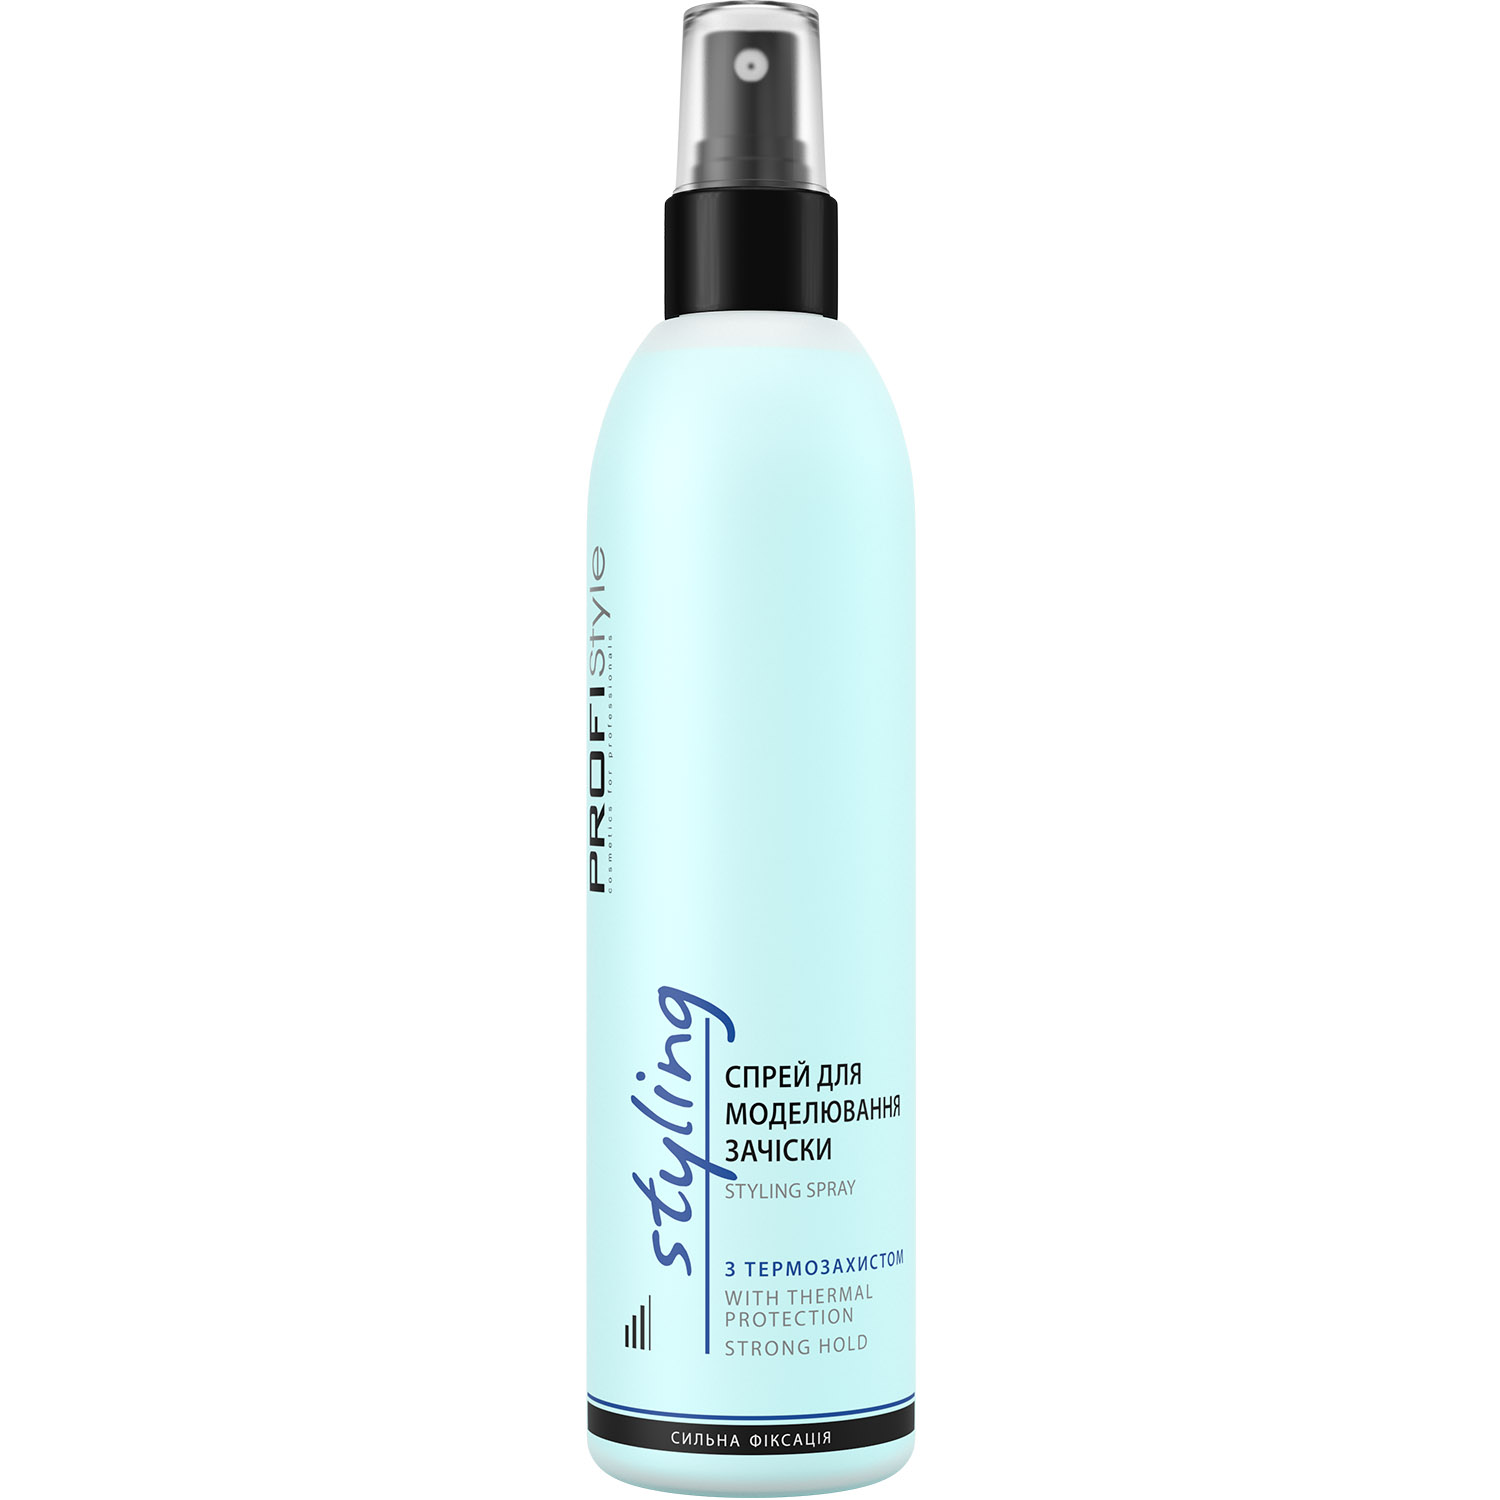 Спрей для моделювання зачіски ProfiStyle Styling Spray With Thermal Protection Strong Hold з термозахистом 250 мл - фото 1